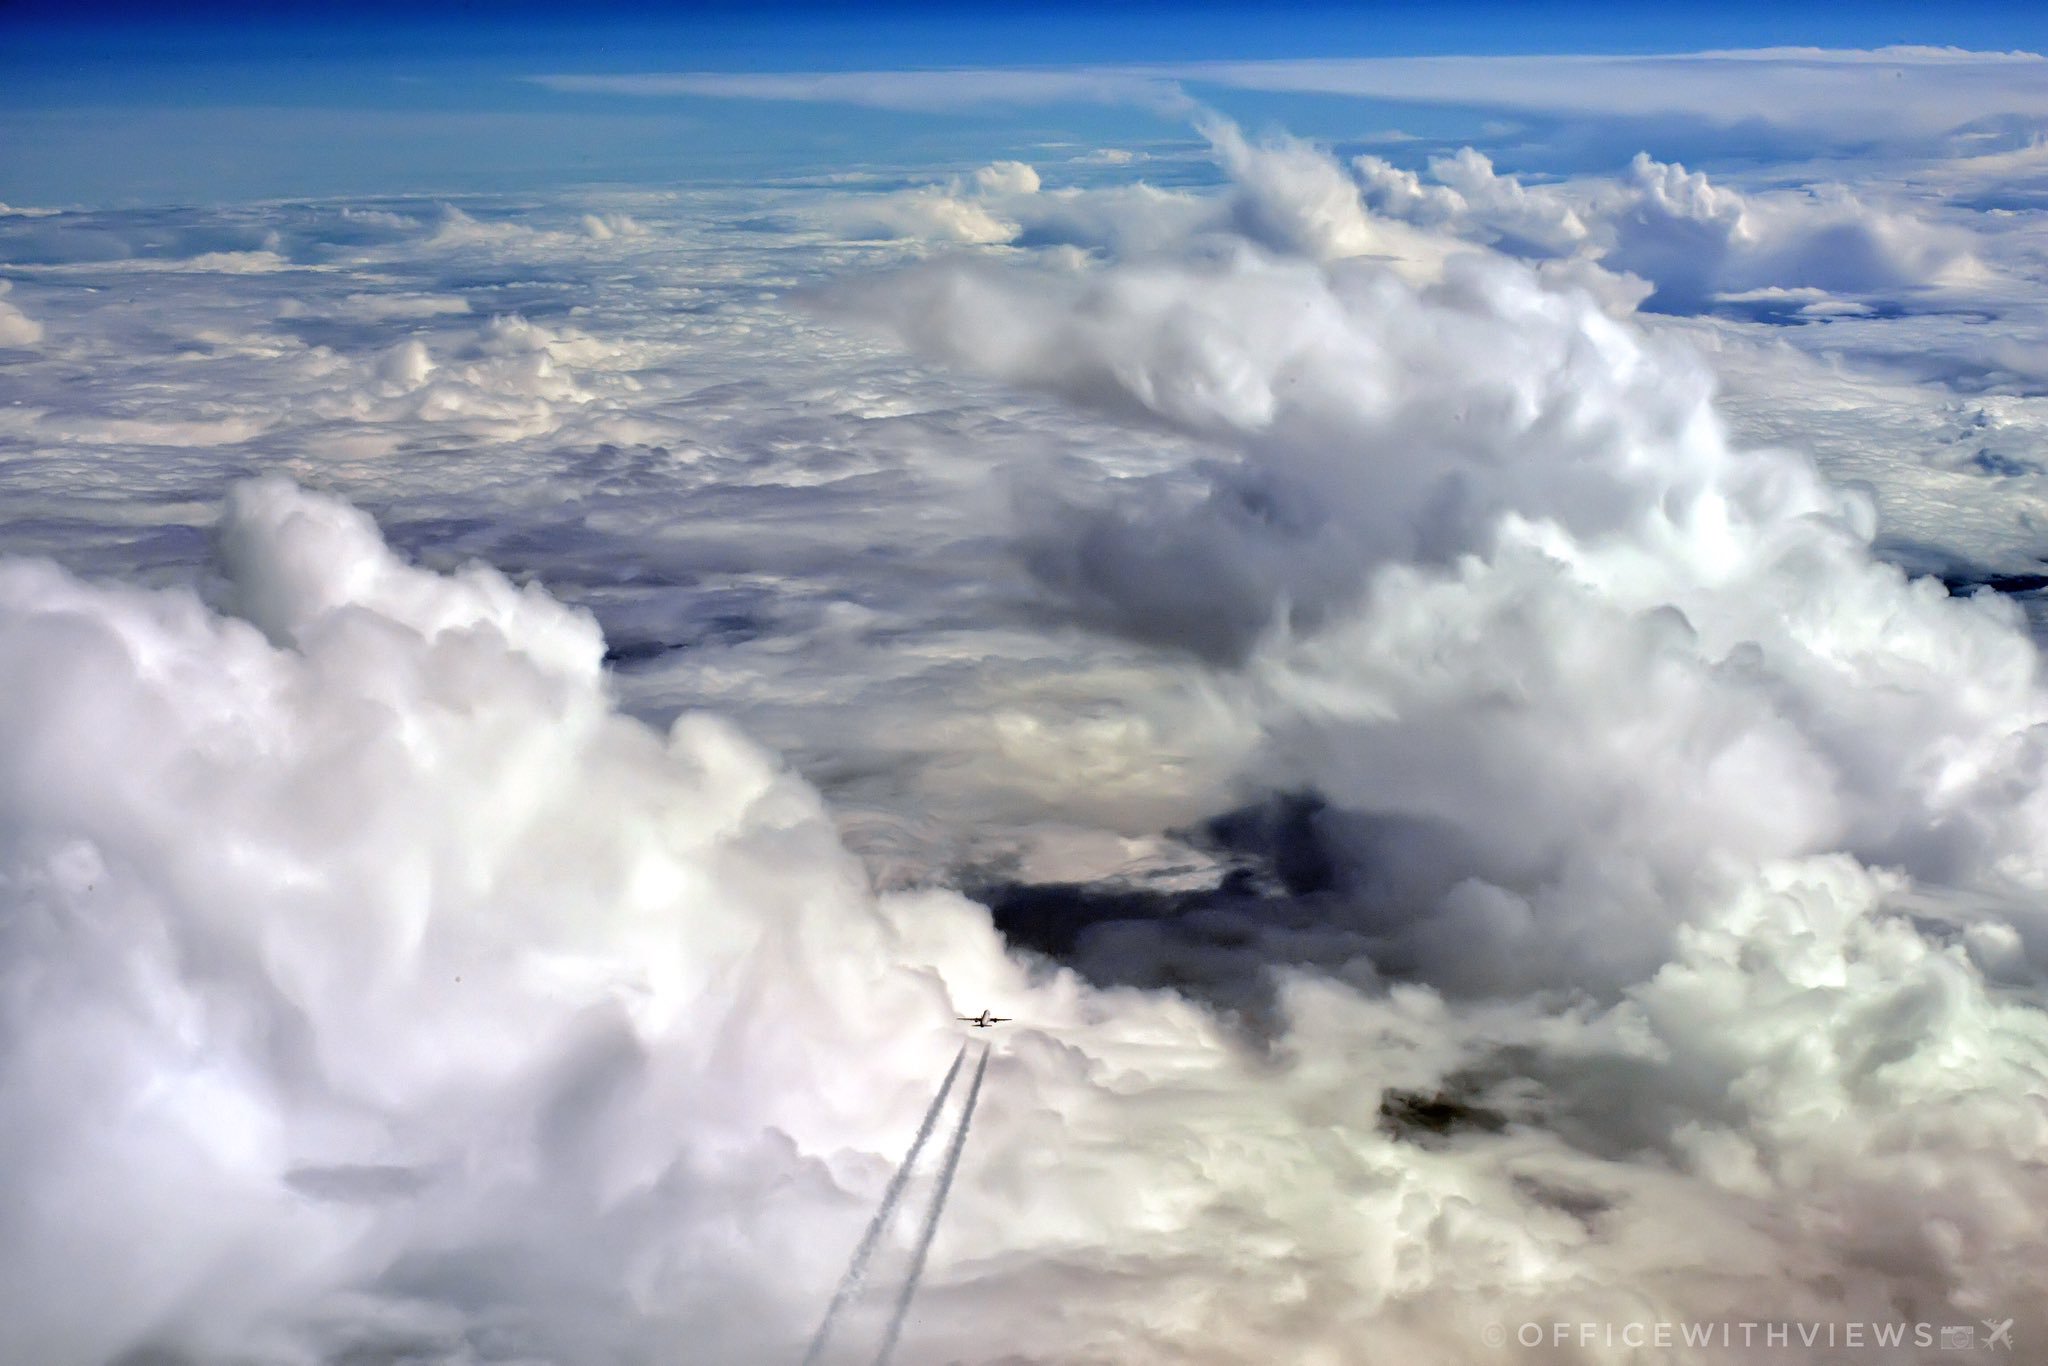 Cloudsurfing by Jordi Martin Garcia @officewithviews